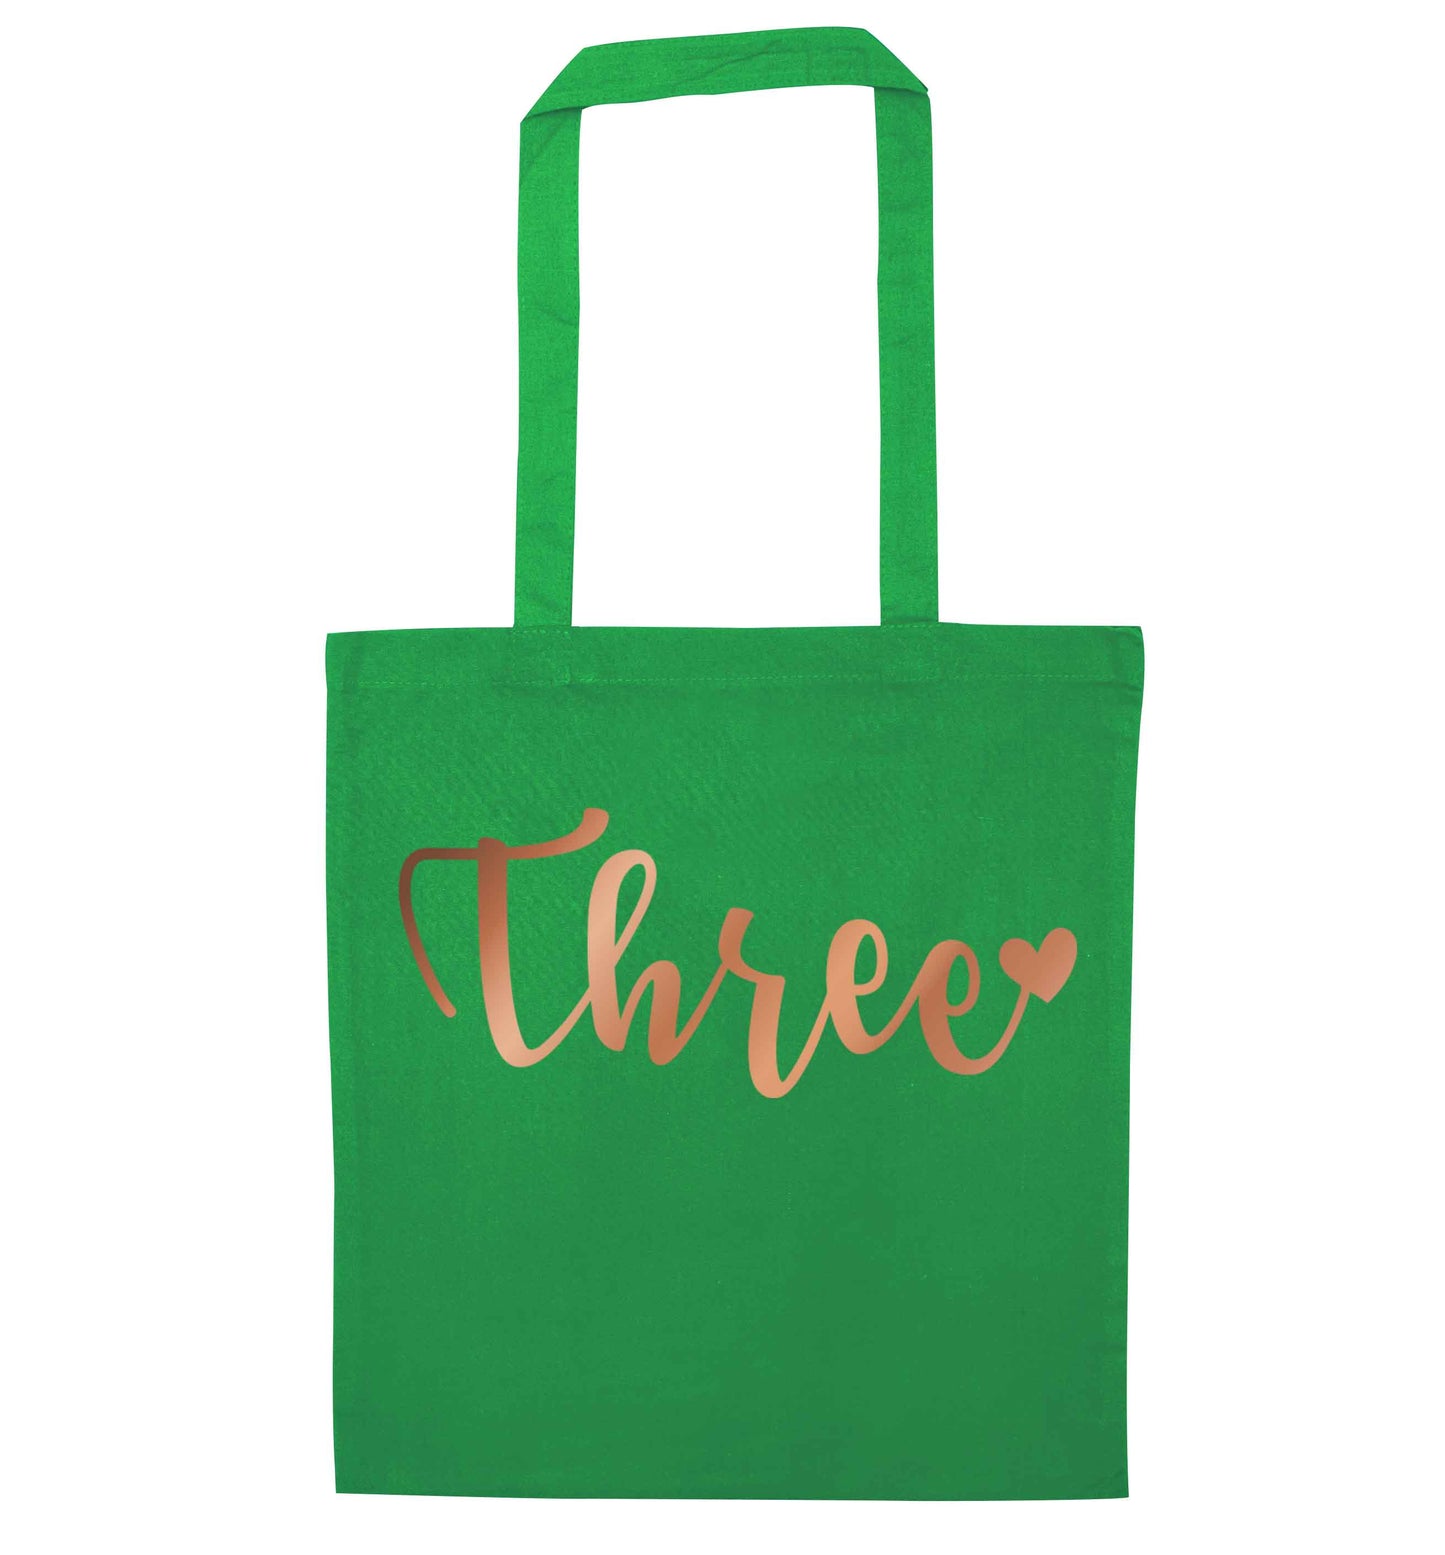 Three rose gold green tote bag